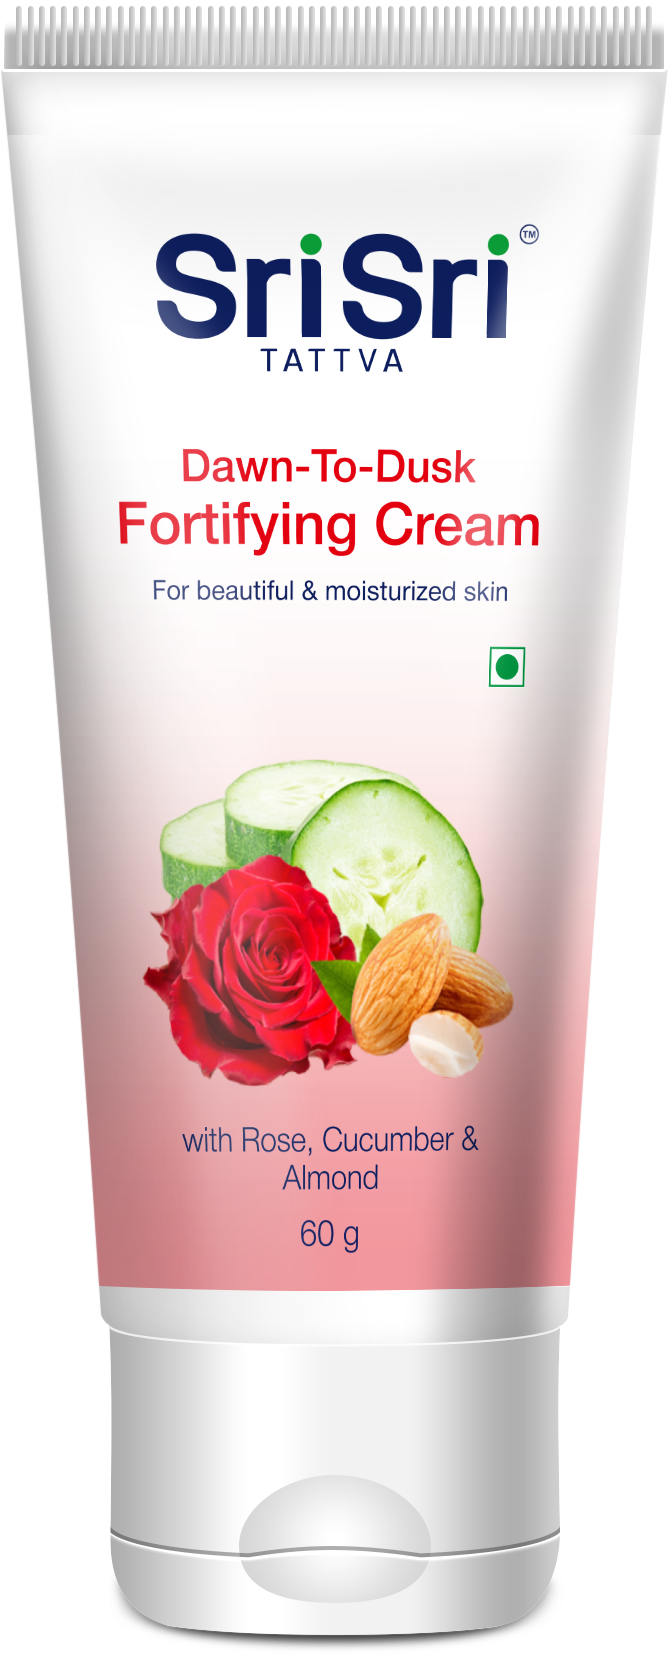 Buy Sri Sri Tattva Dawn-To-Dusk Fortifying Cream at Best Price Online